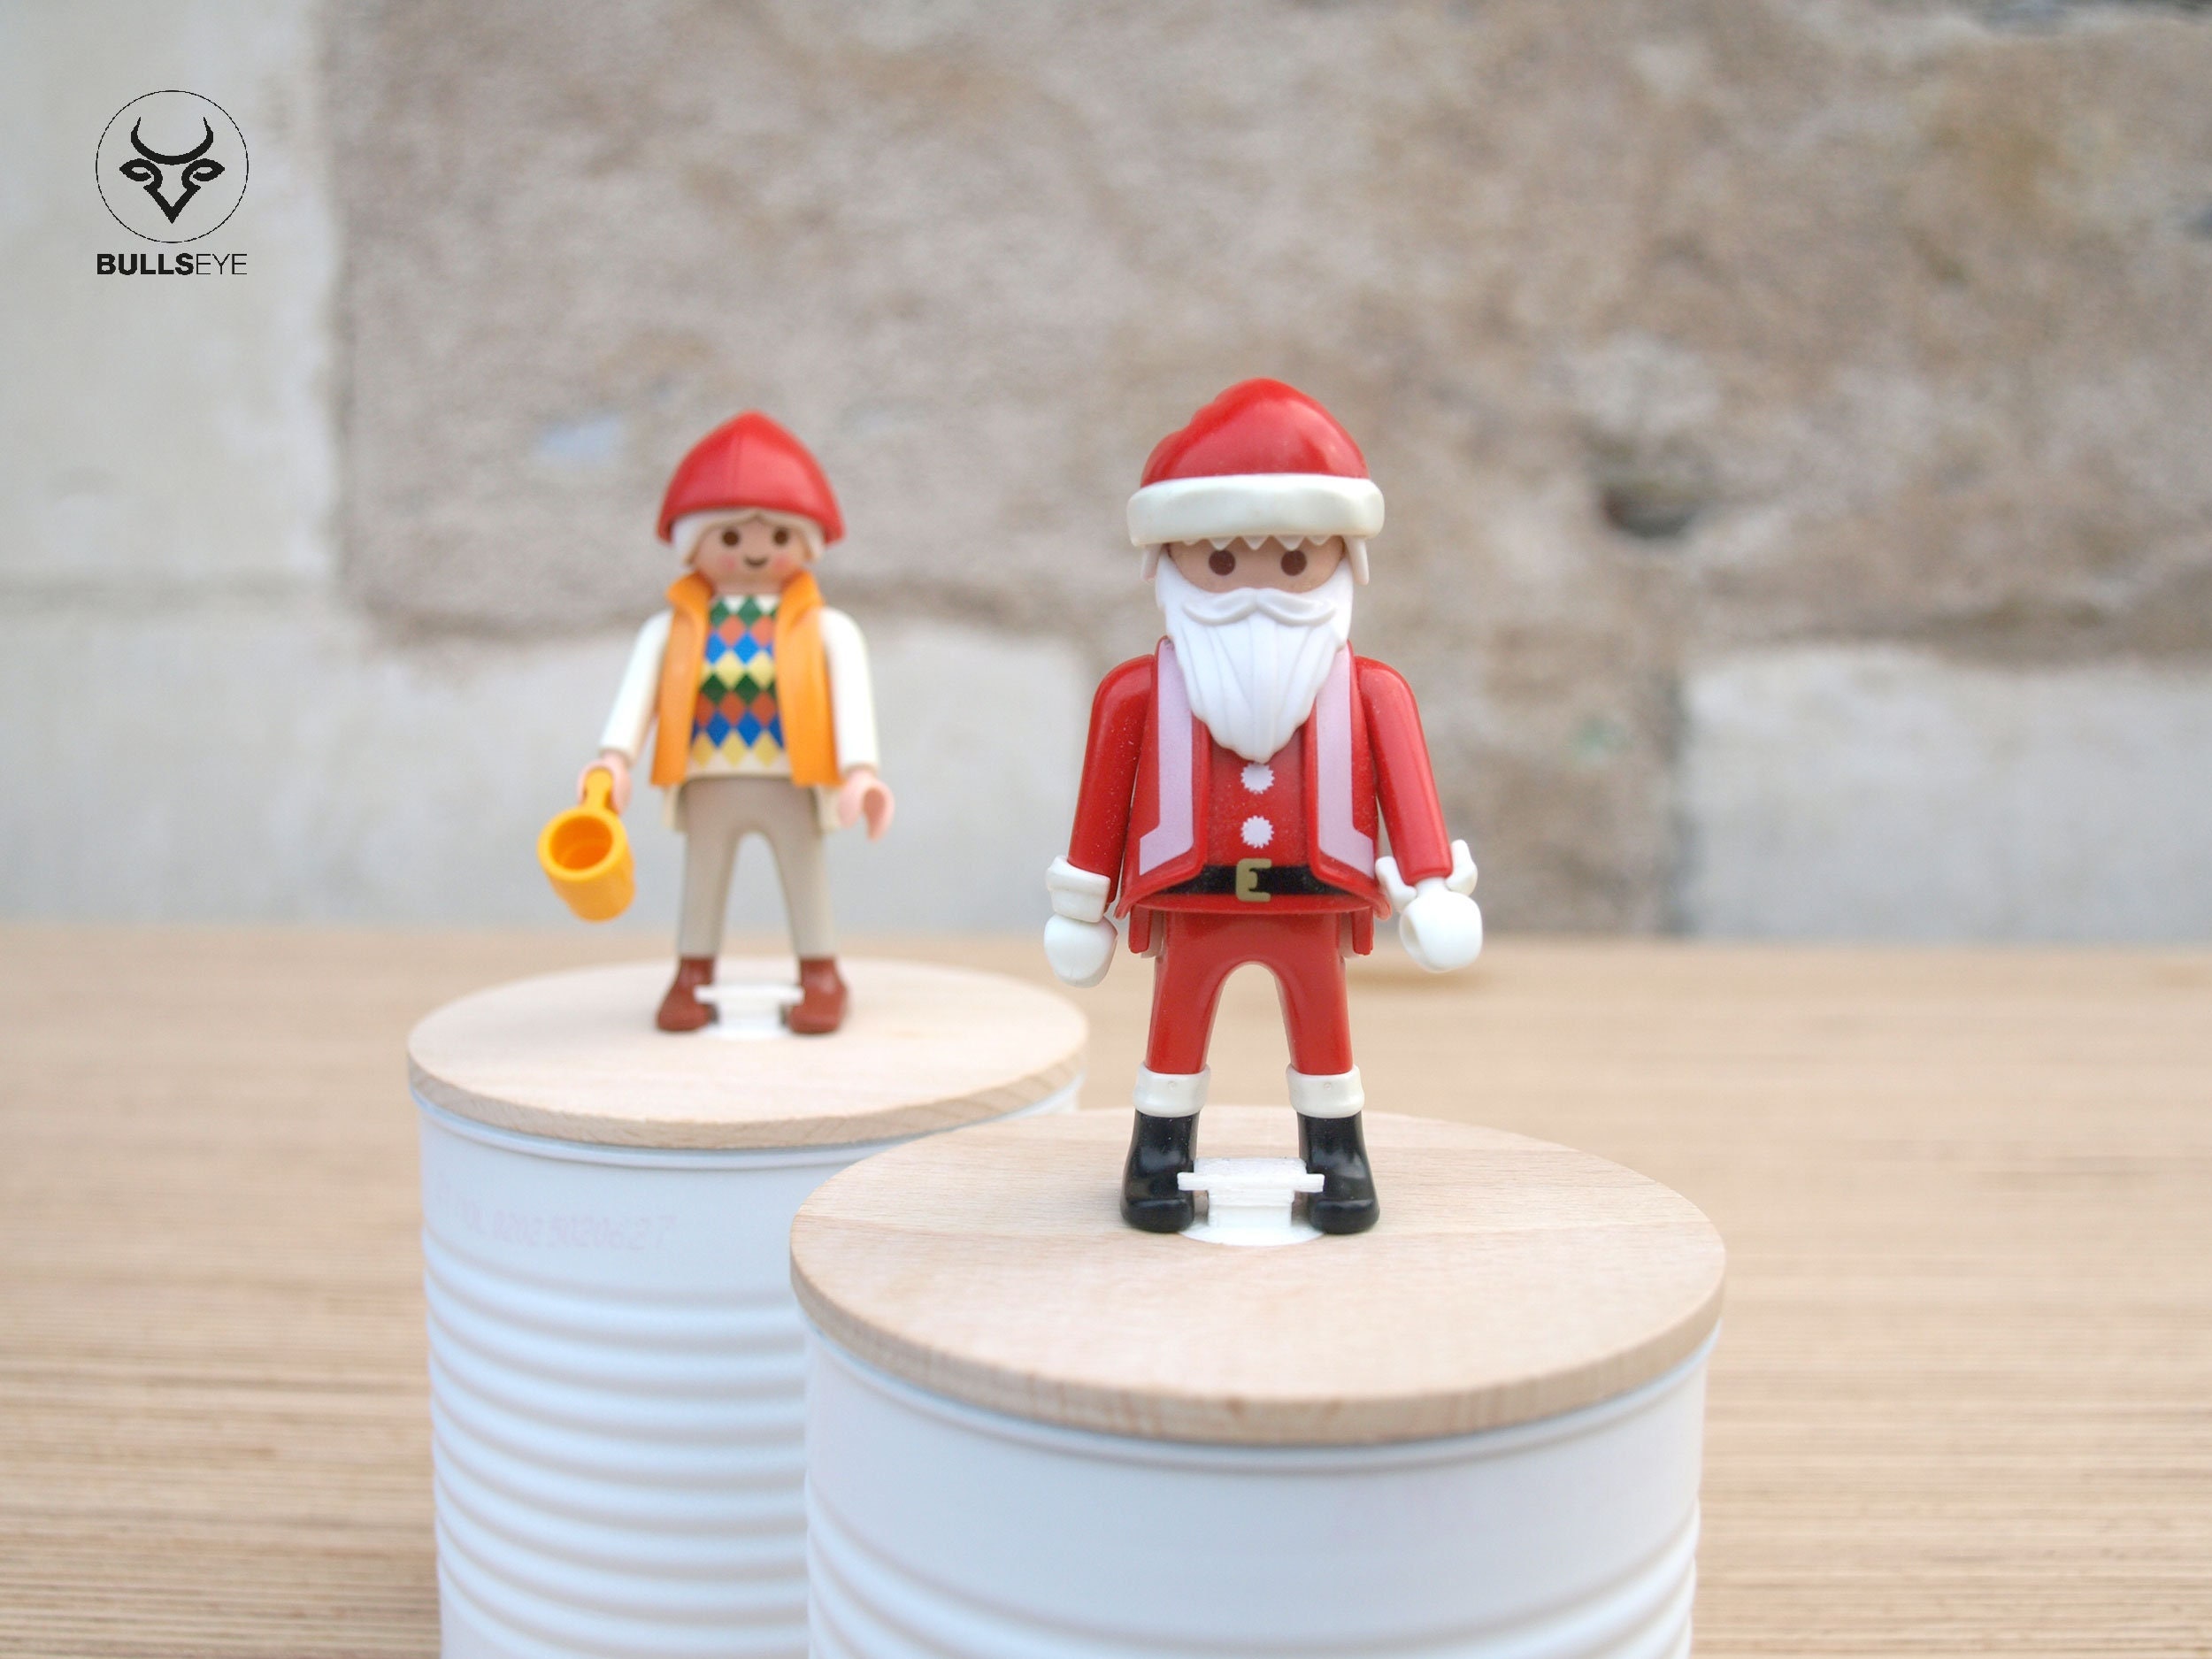 Boîte décorative avec figurine PLAYMOBIL® - cadeau utile & ludique